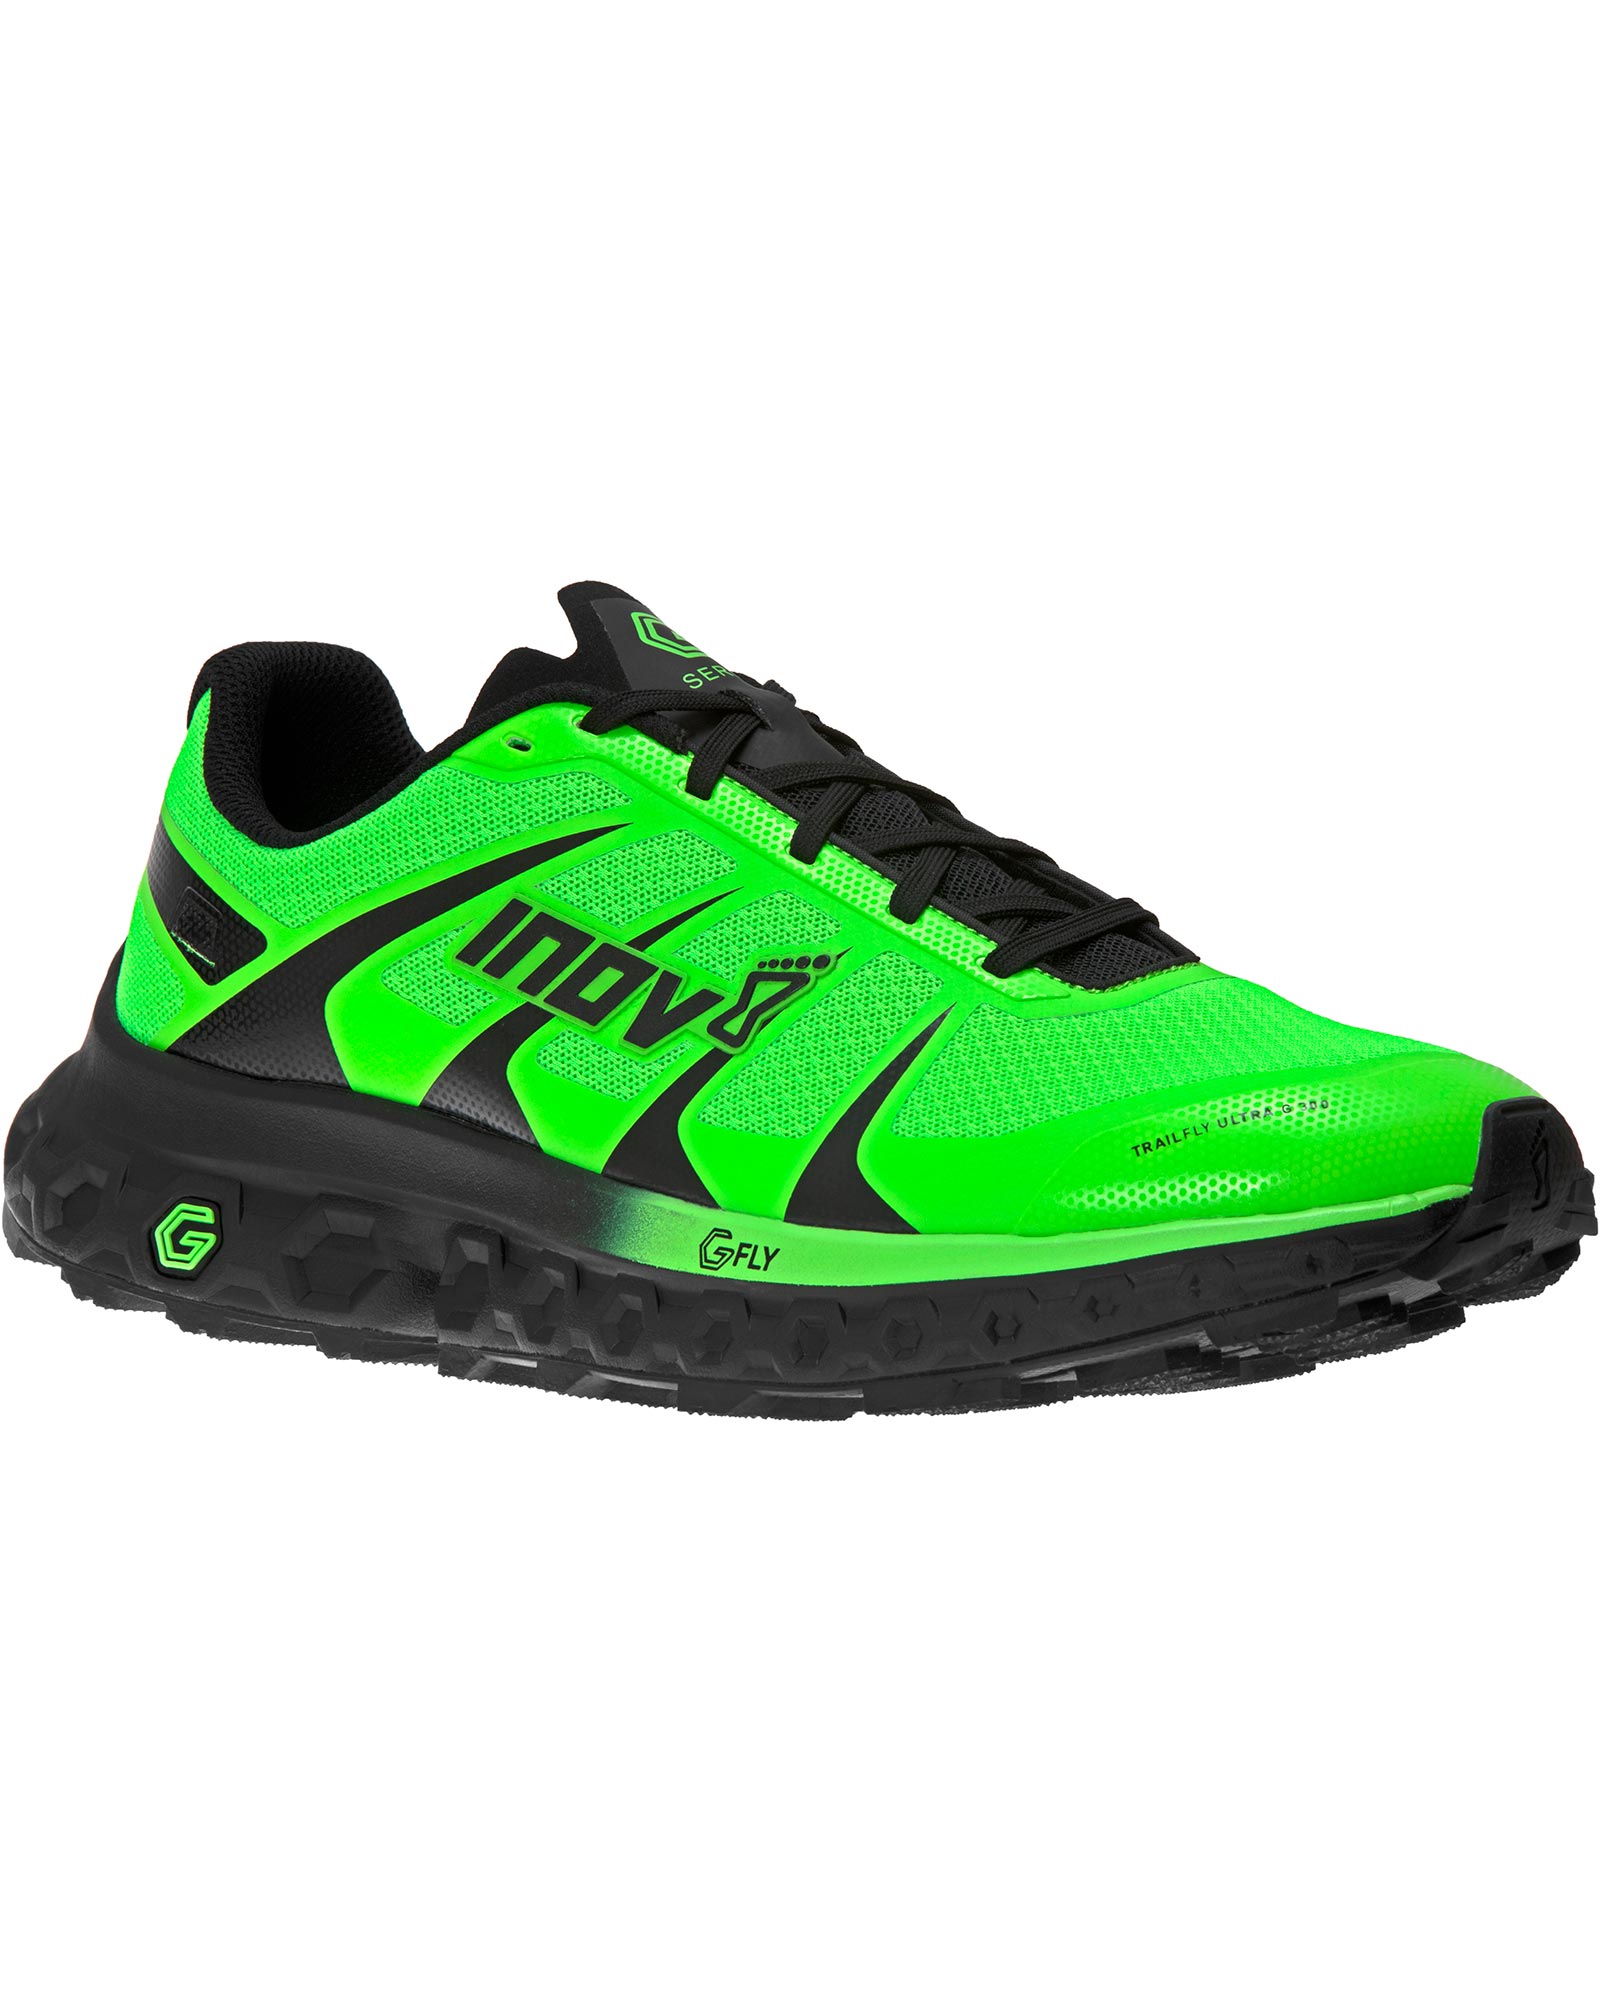 Inov 8 TrailFly Ultra G 300 Max Women’s Shoes - Green/Black UK 5